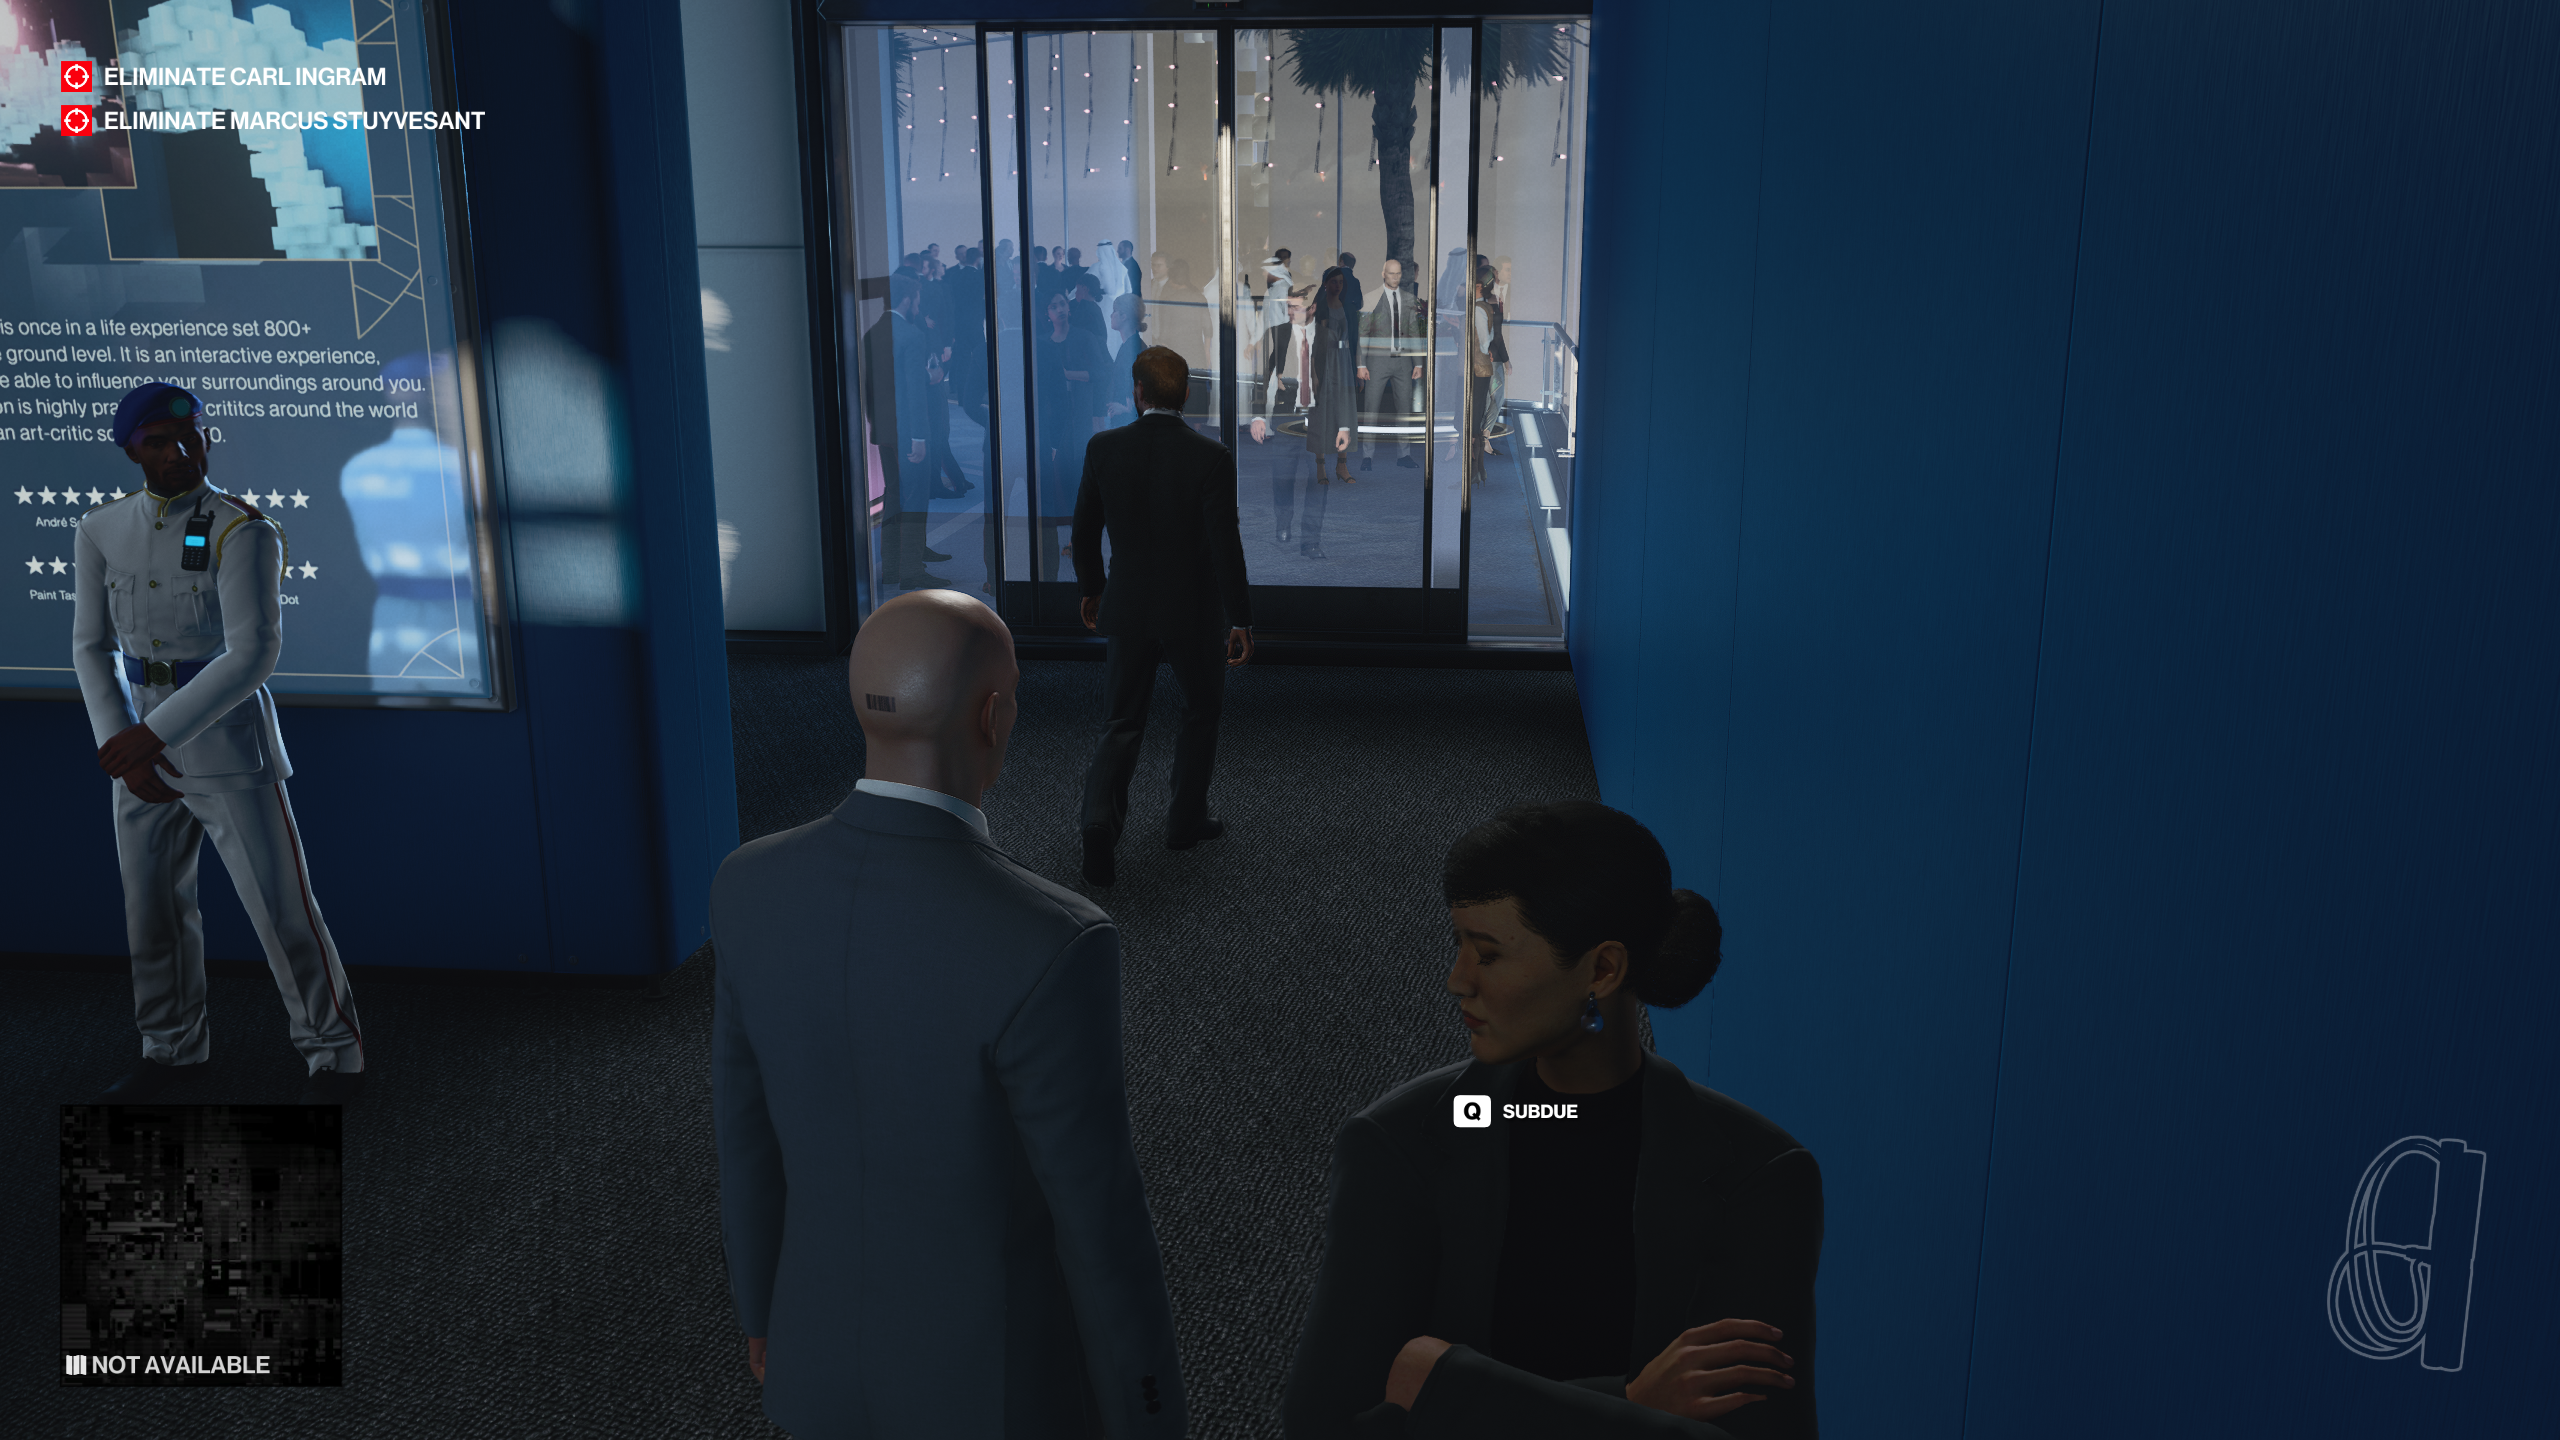 El Agente 47 observa a un hombre acercarse a una puerta de vidrio en Hitman 3.